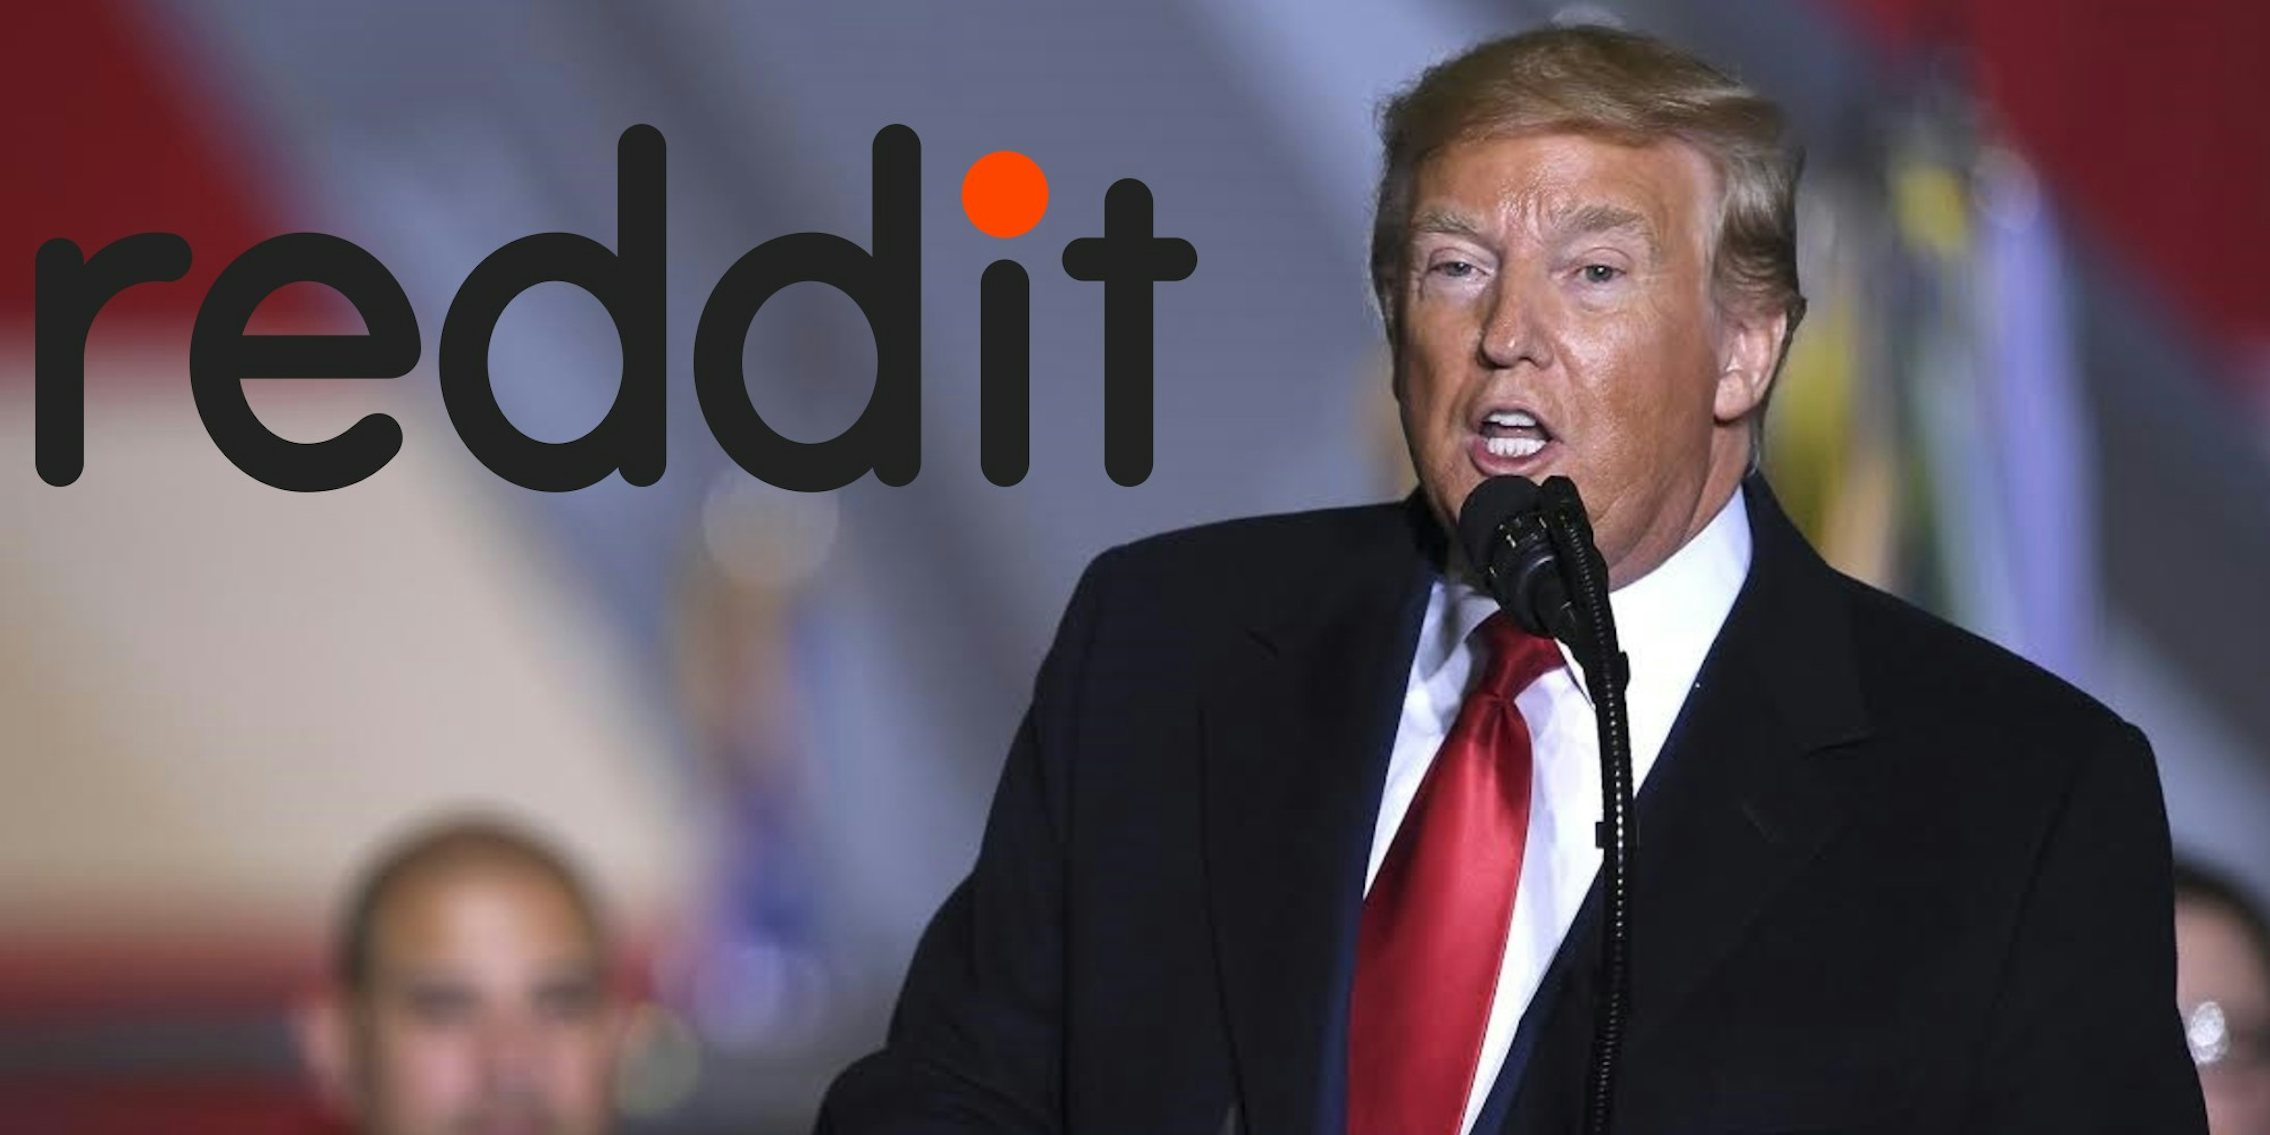 President Donald Trump next to the Reddit logo